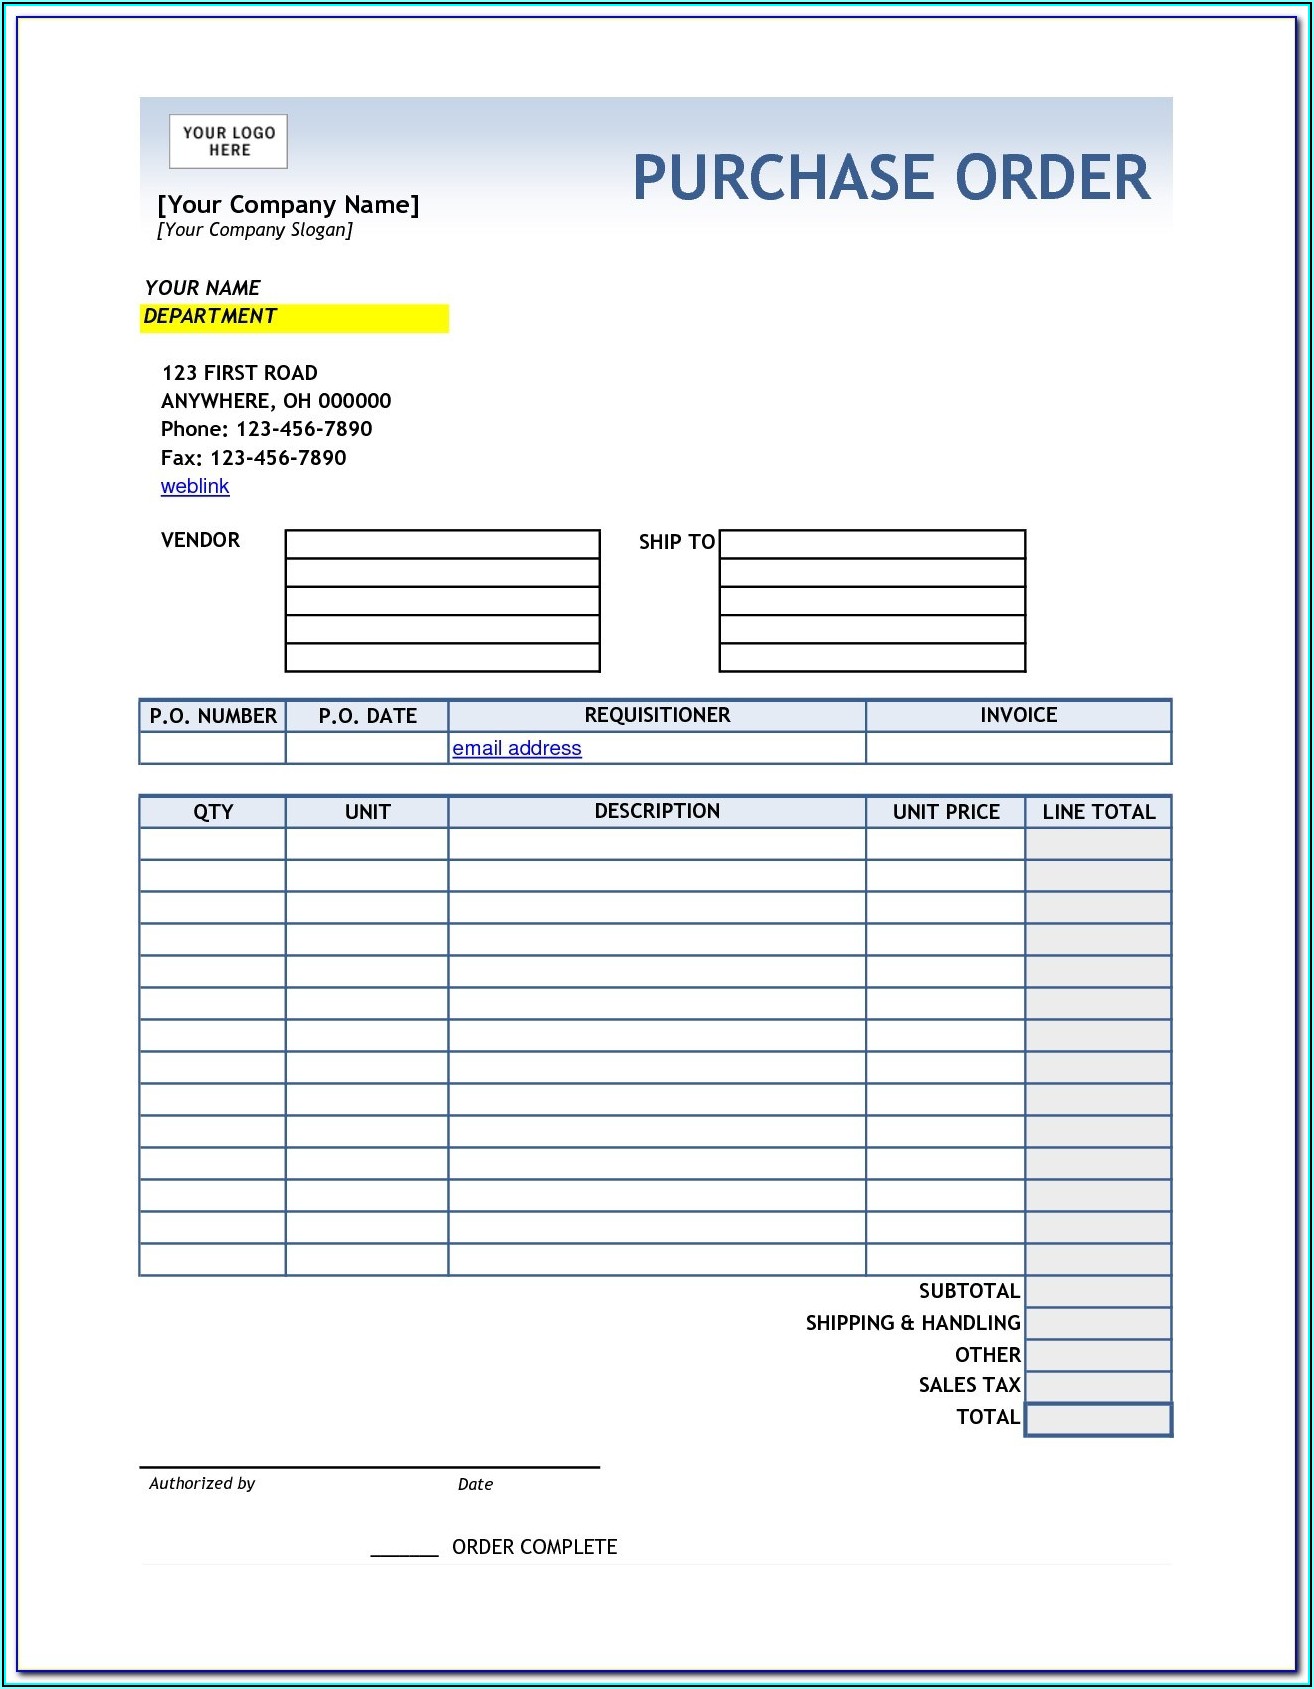 Purchase Order Form Excel Download